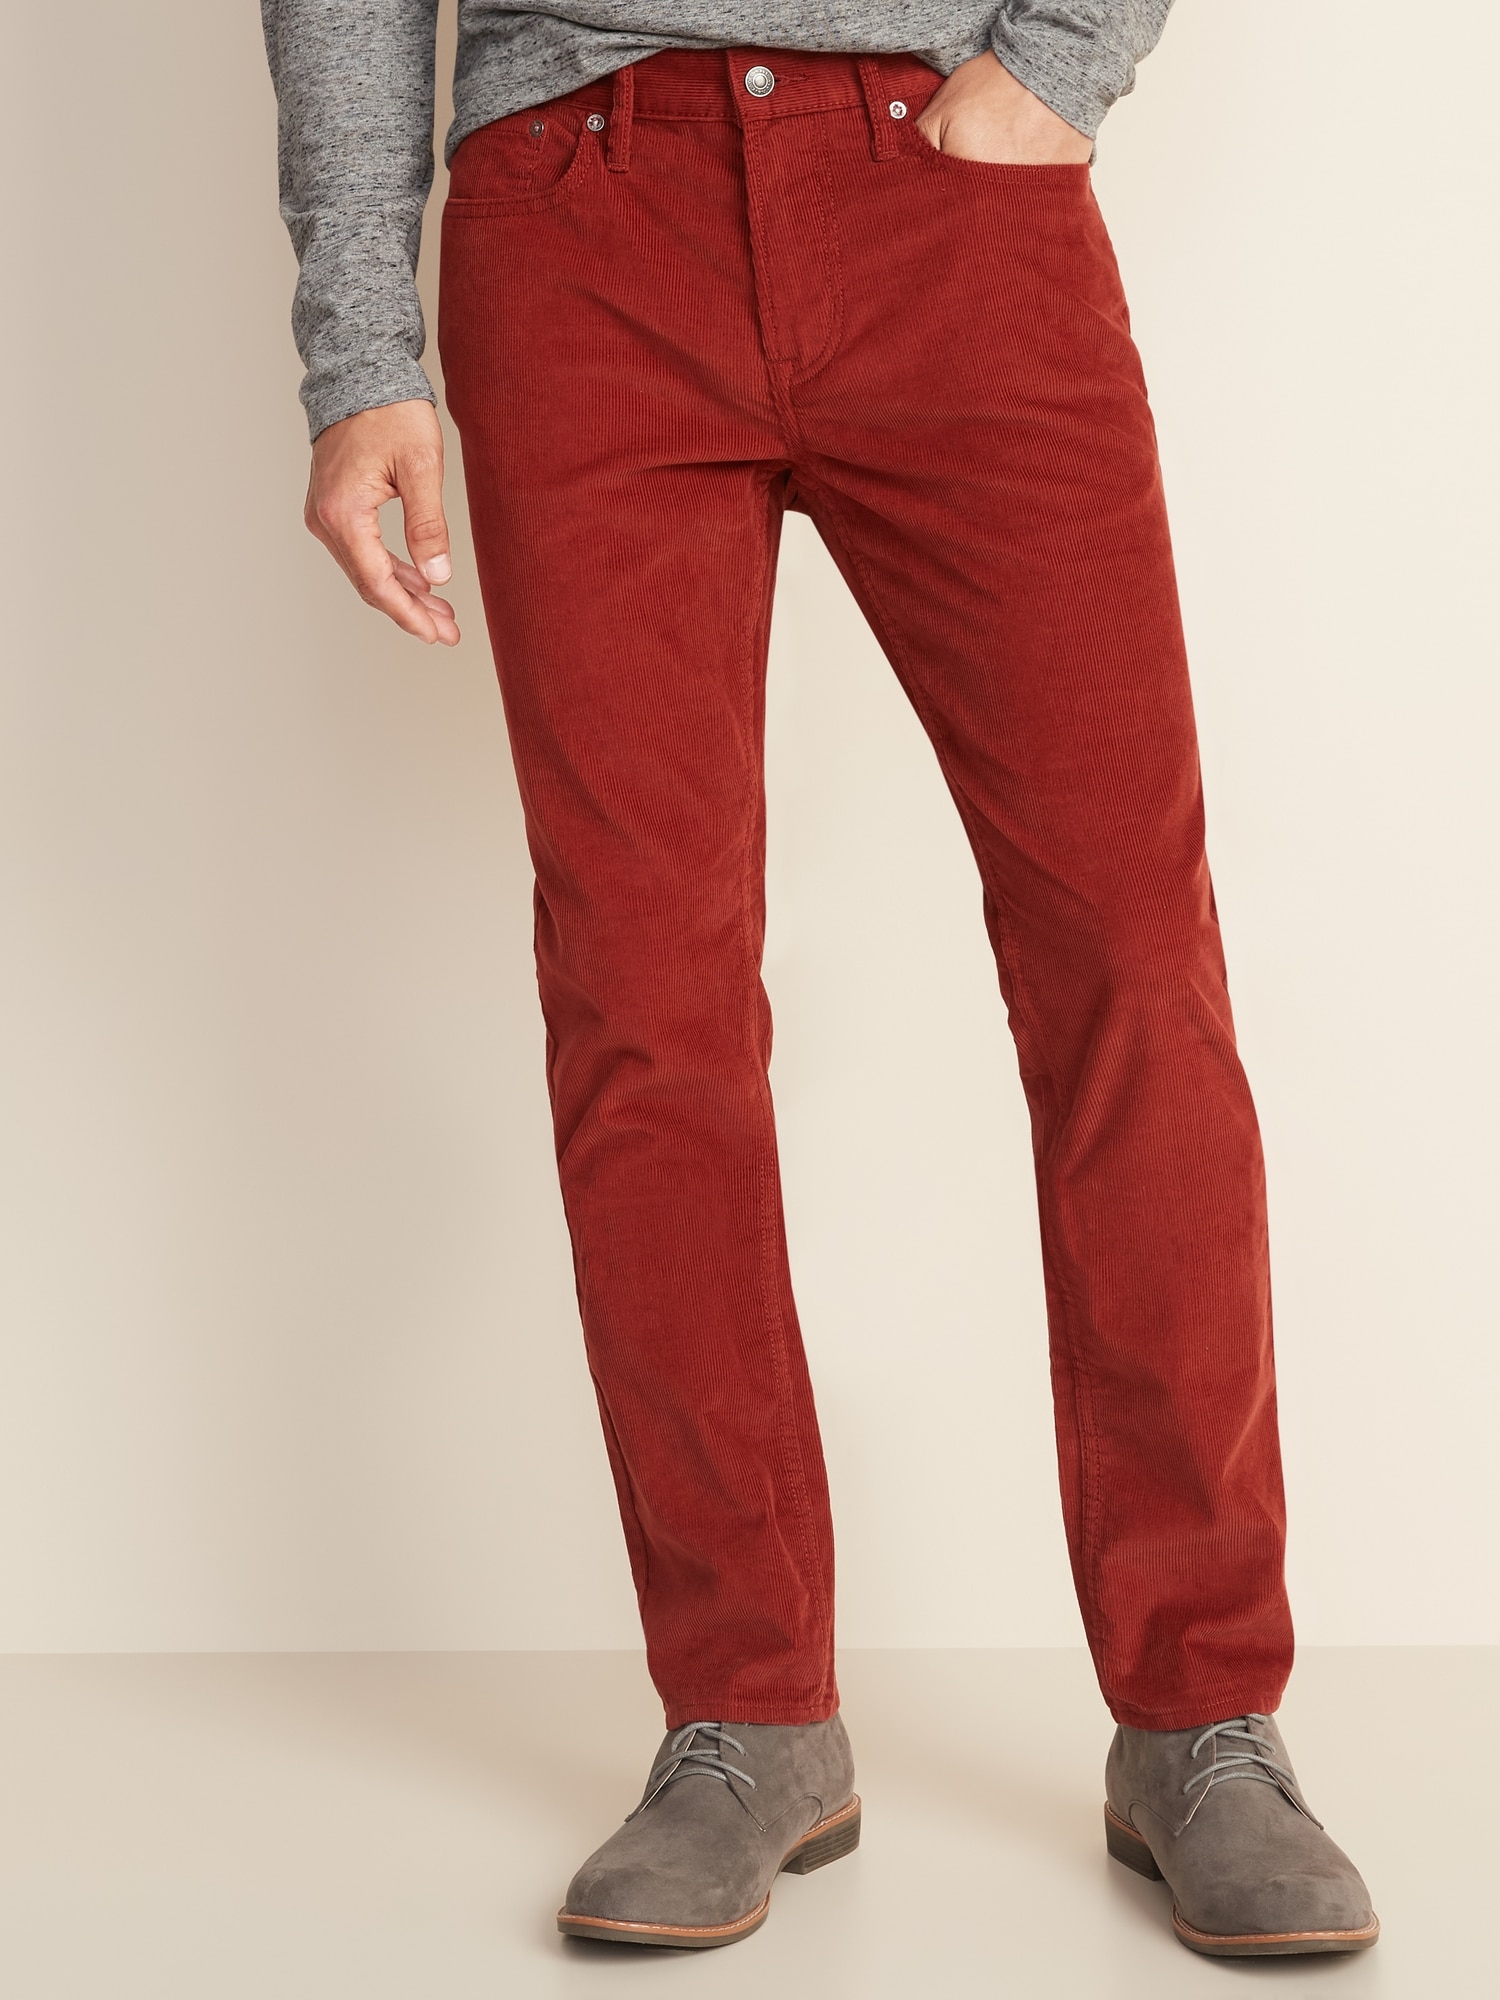 corduroy pants red